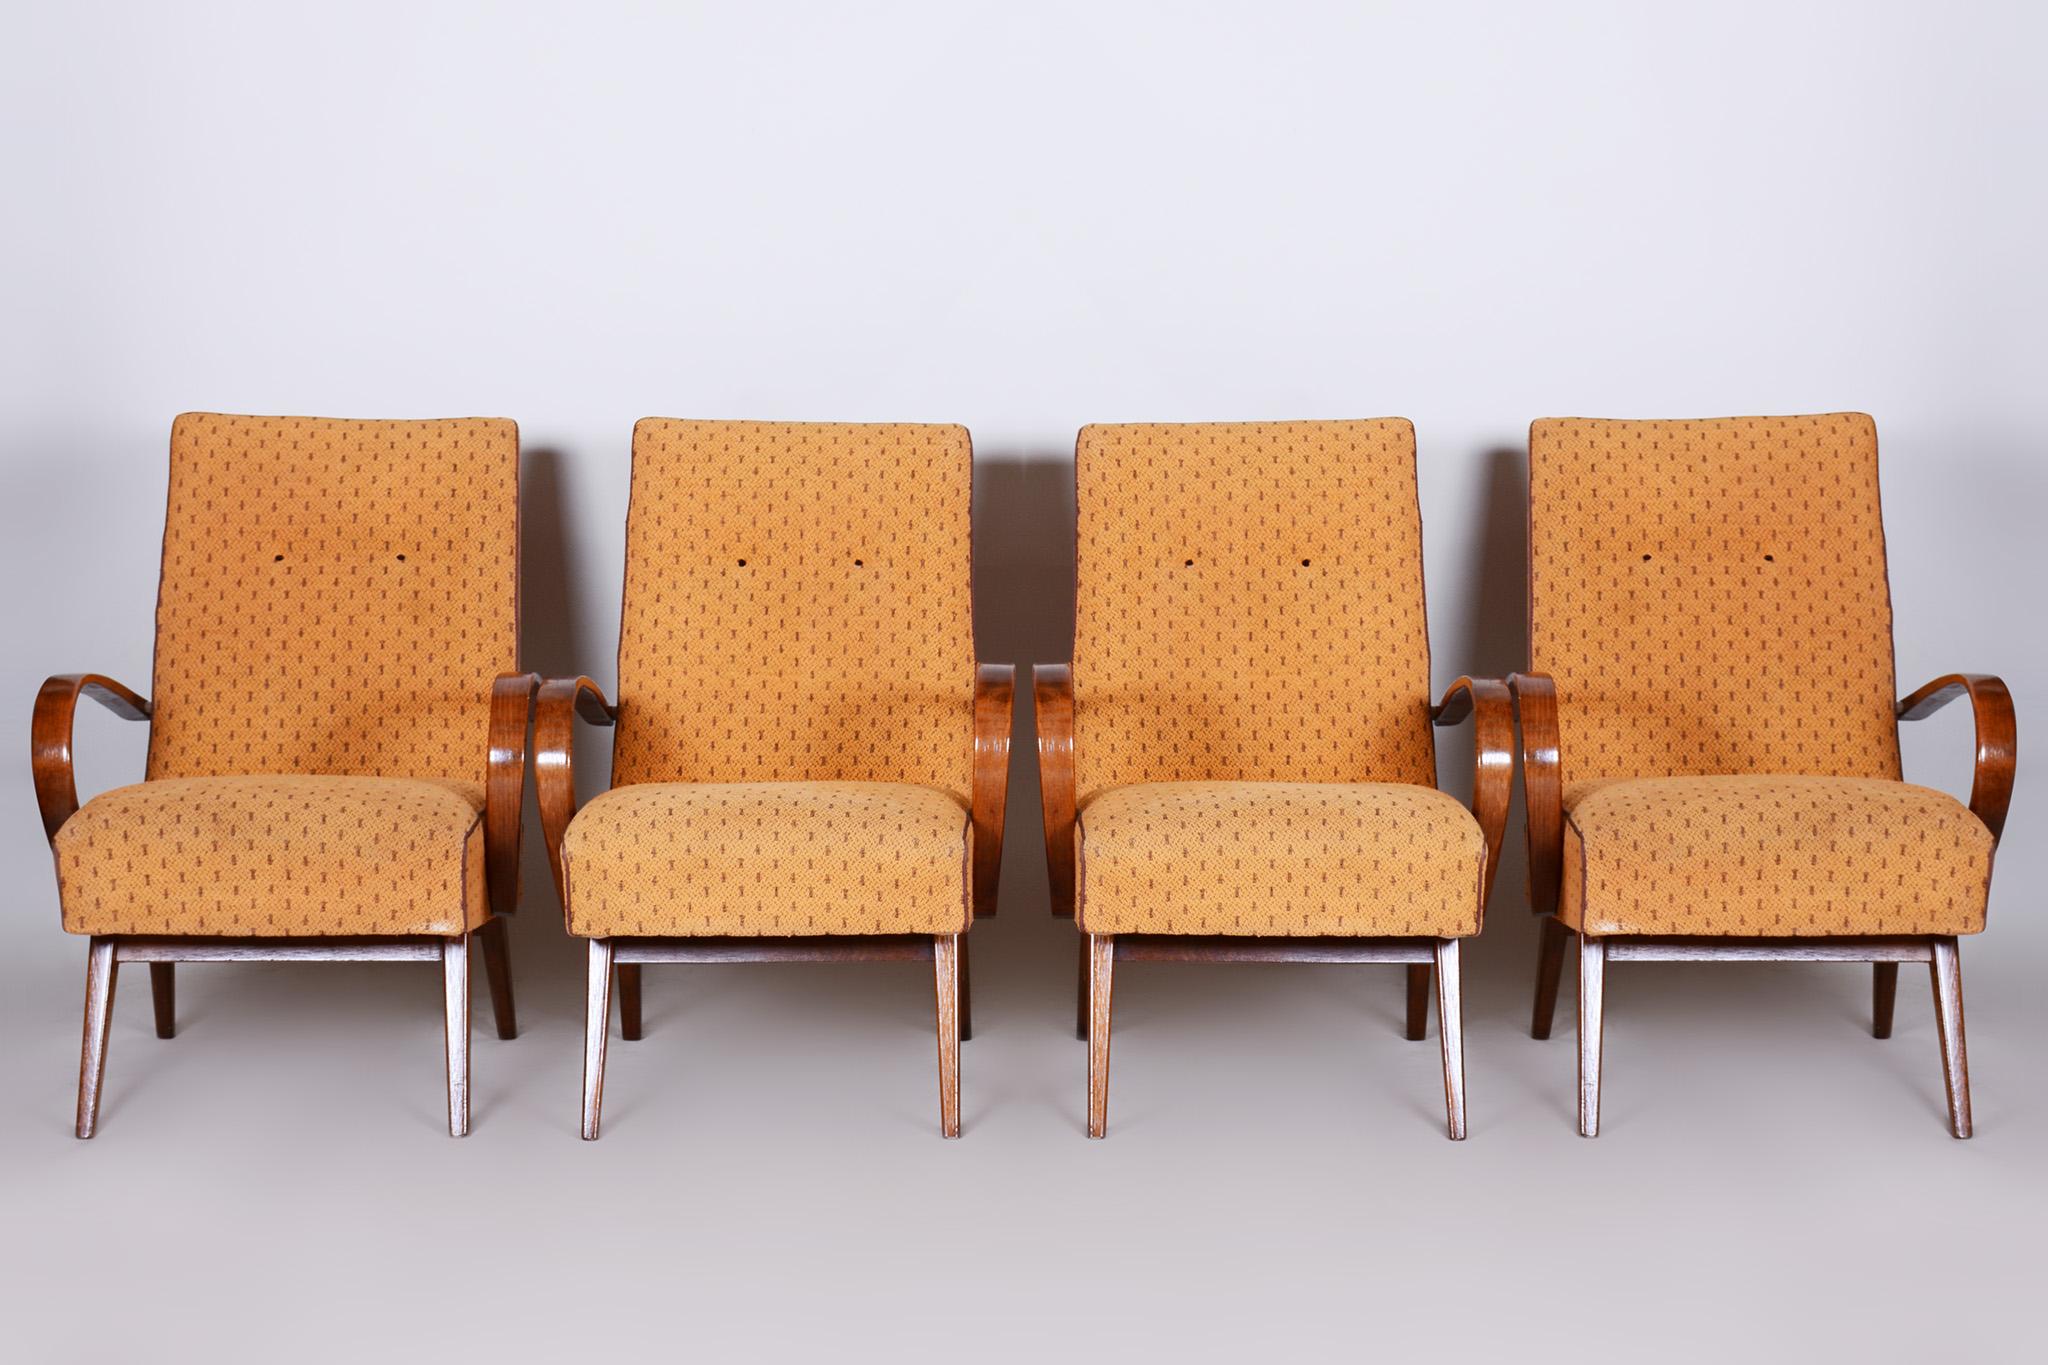 Four armchairs, midcentury, Czechoslovakia
Period 1950-1960.
Material: Beech.





